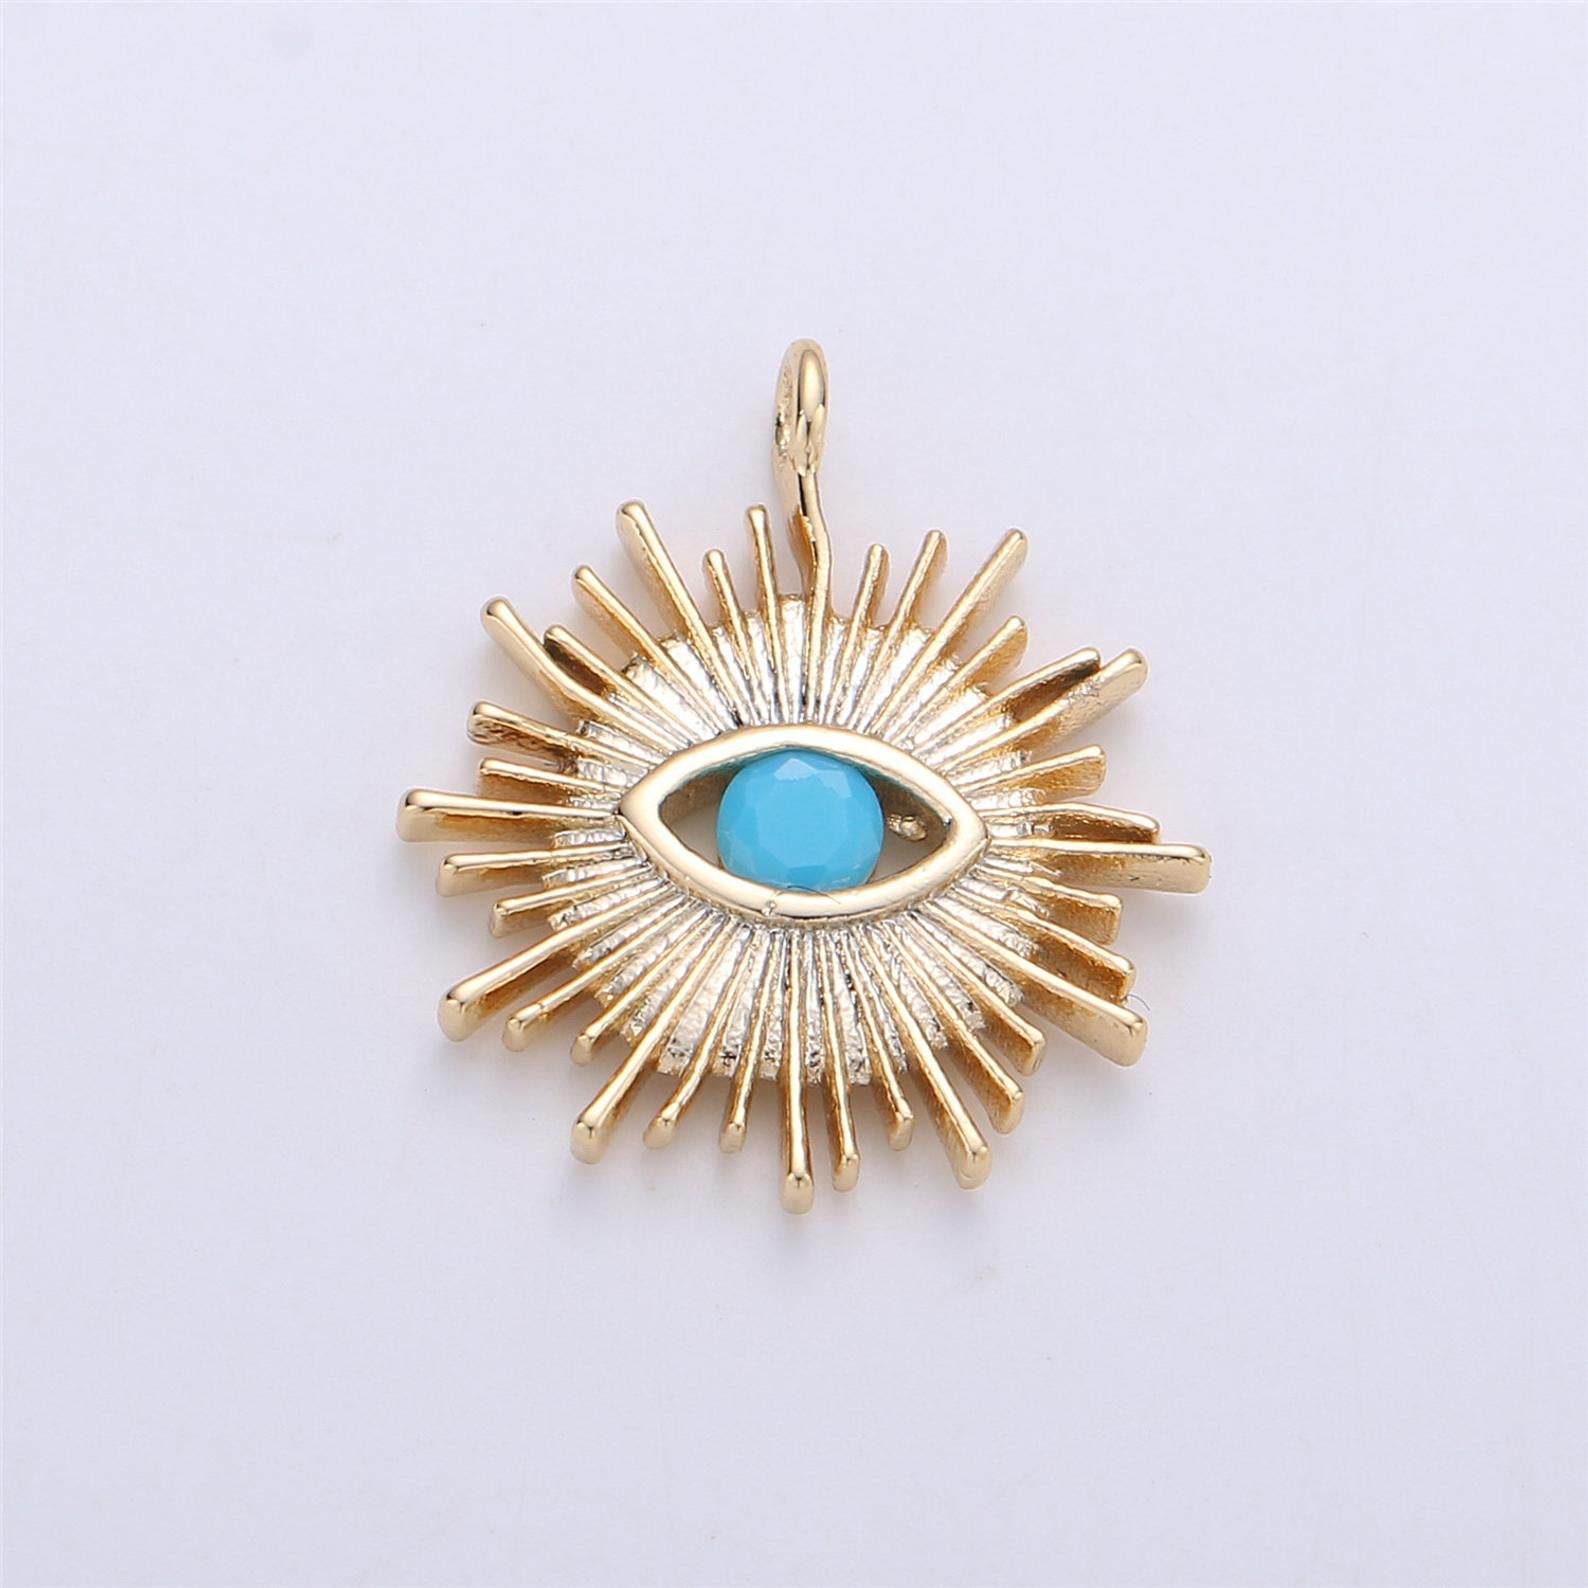 Sunburst Turquoise Evil Eye Charm - Rania Dabagh Jewelry